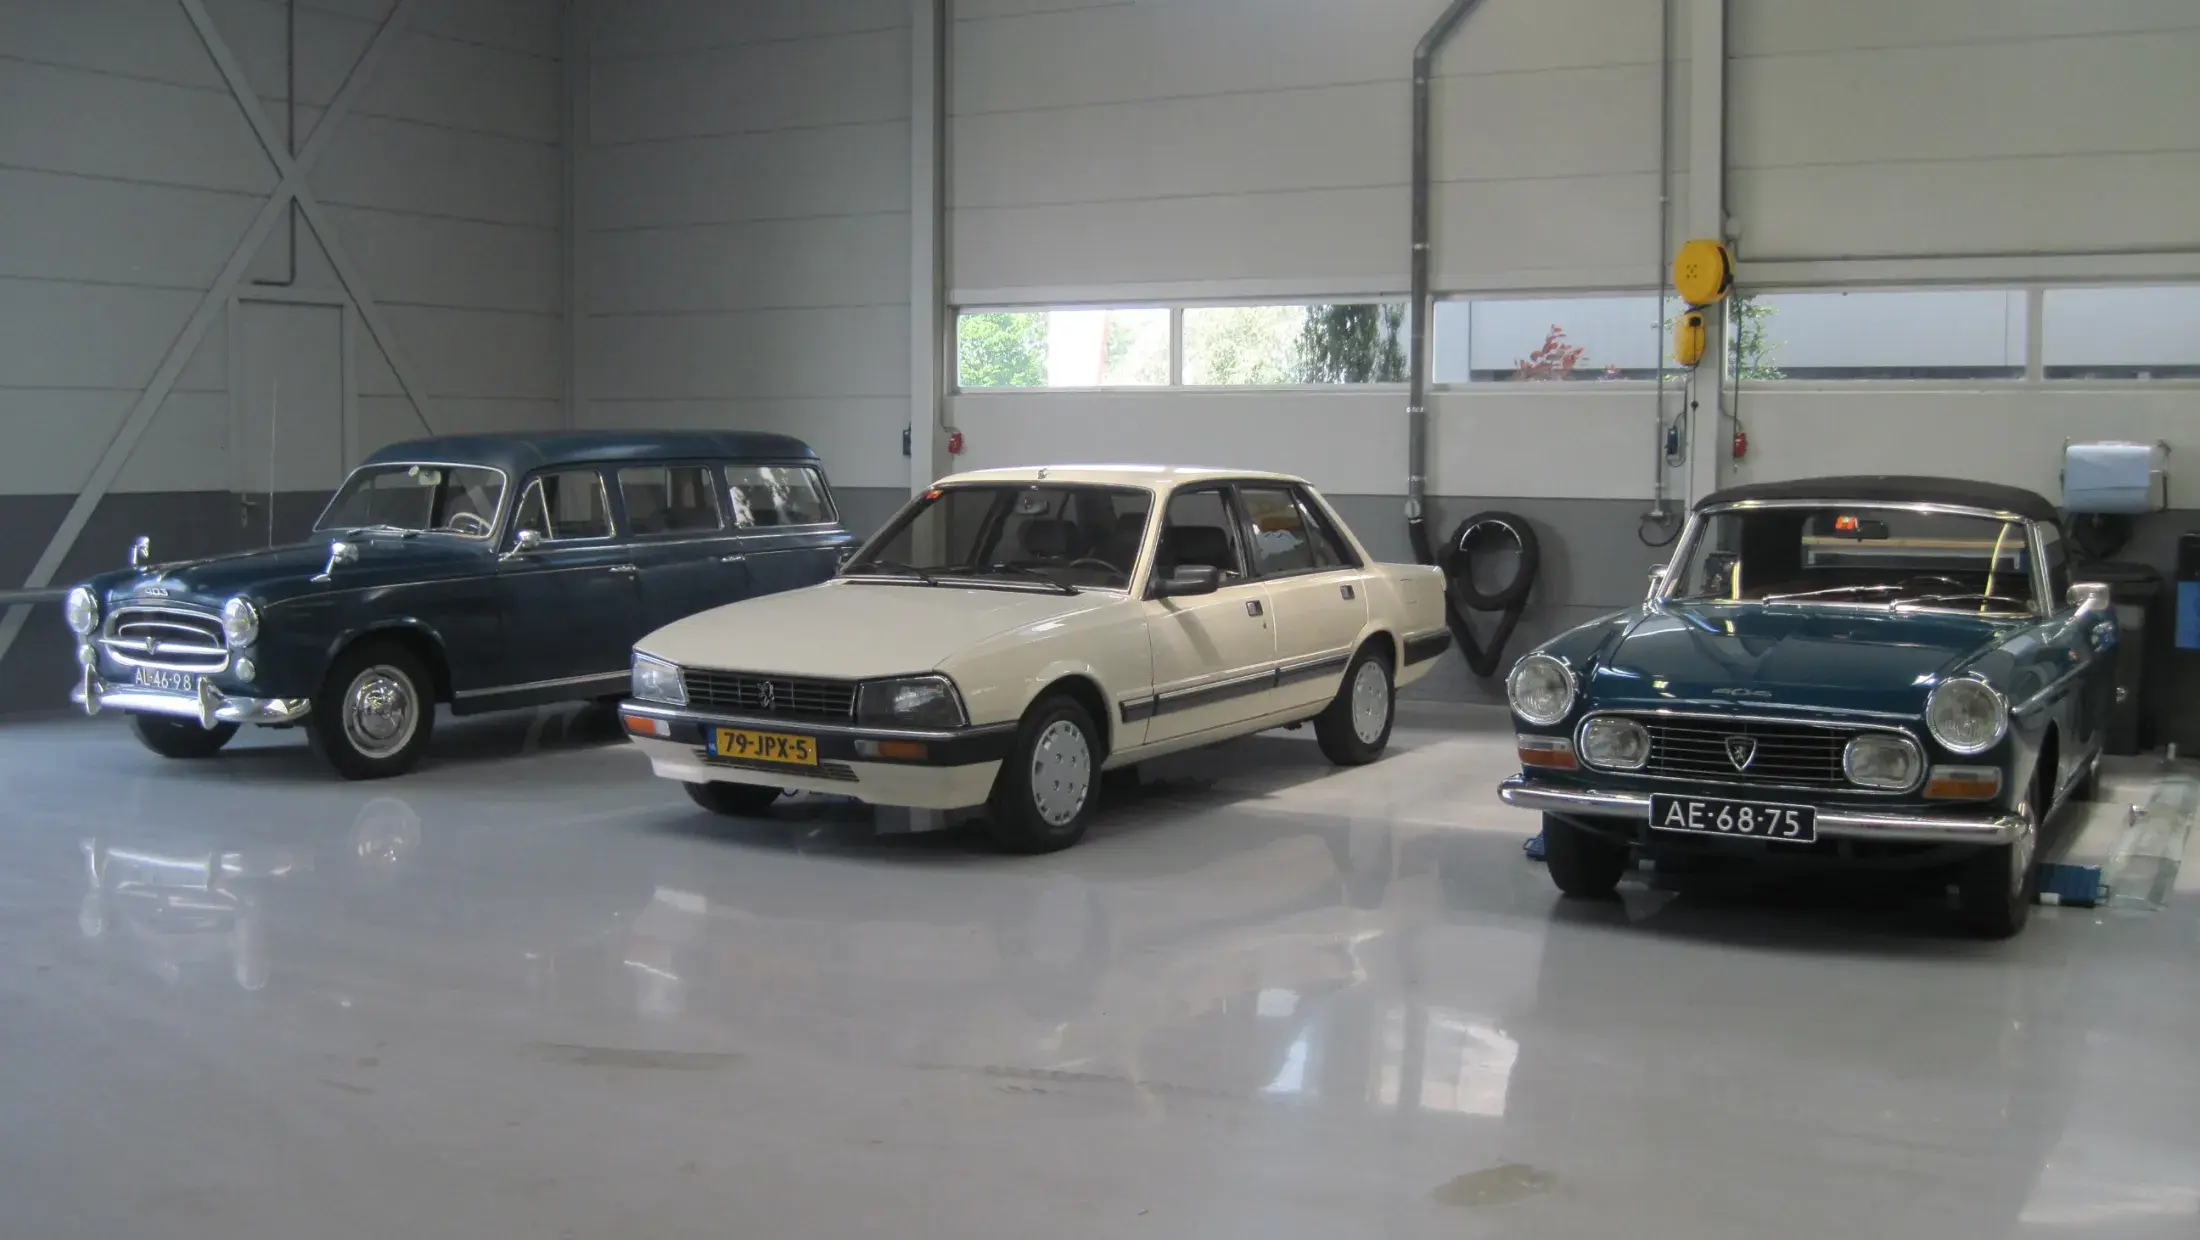 Mooie oude Peugeot's